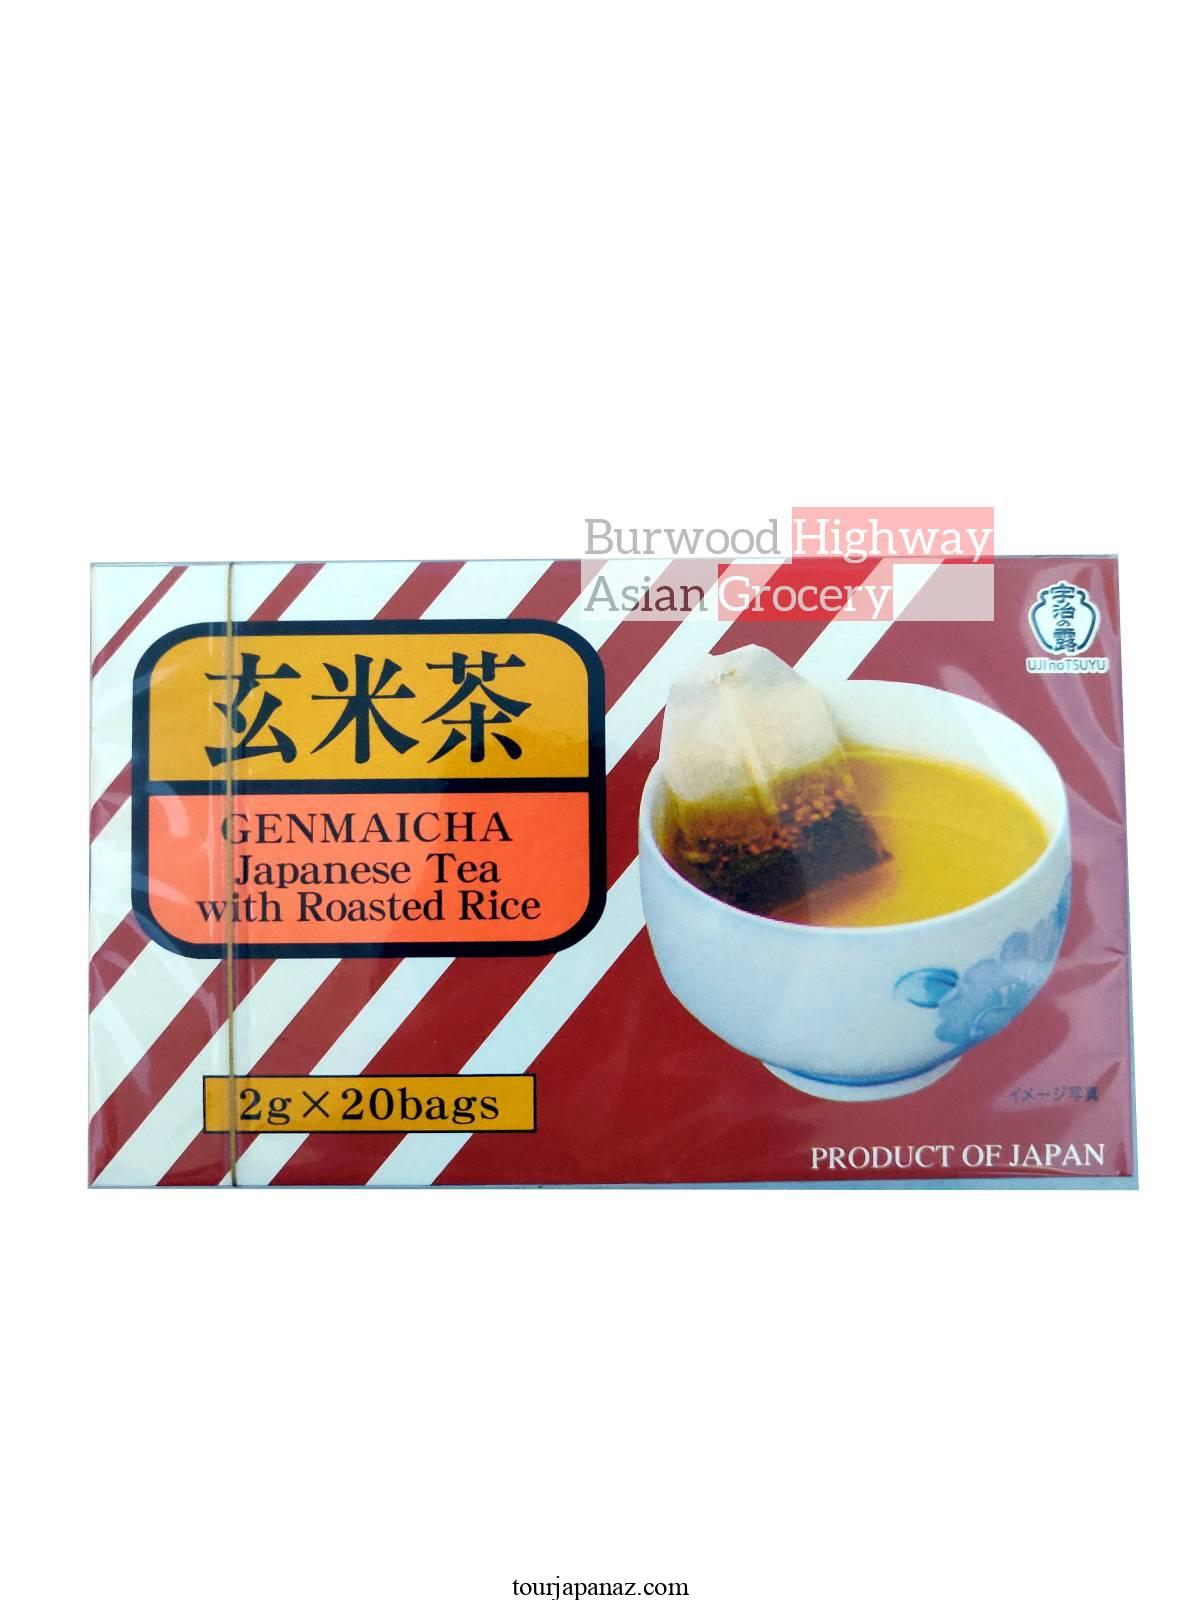 Ujinotsuyu Tokuyo Genmaicha Japanese Tea Bag 400g - Japanese Tea With Roasted Rice 1